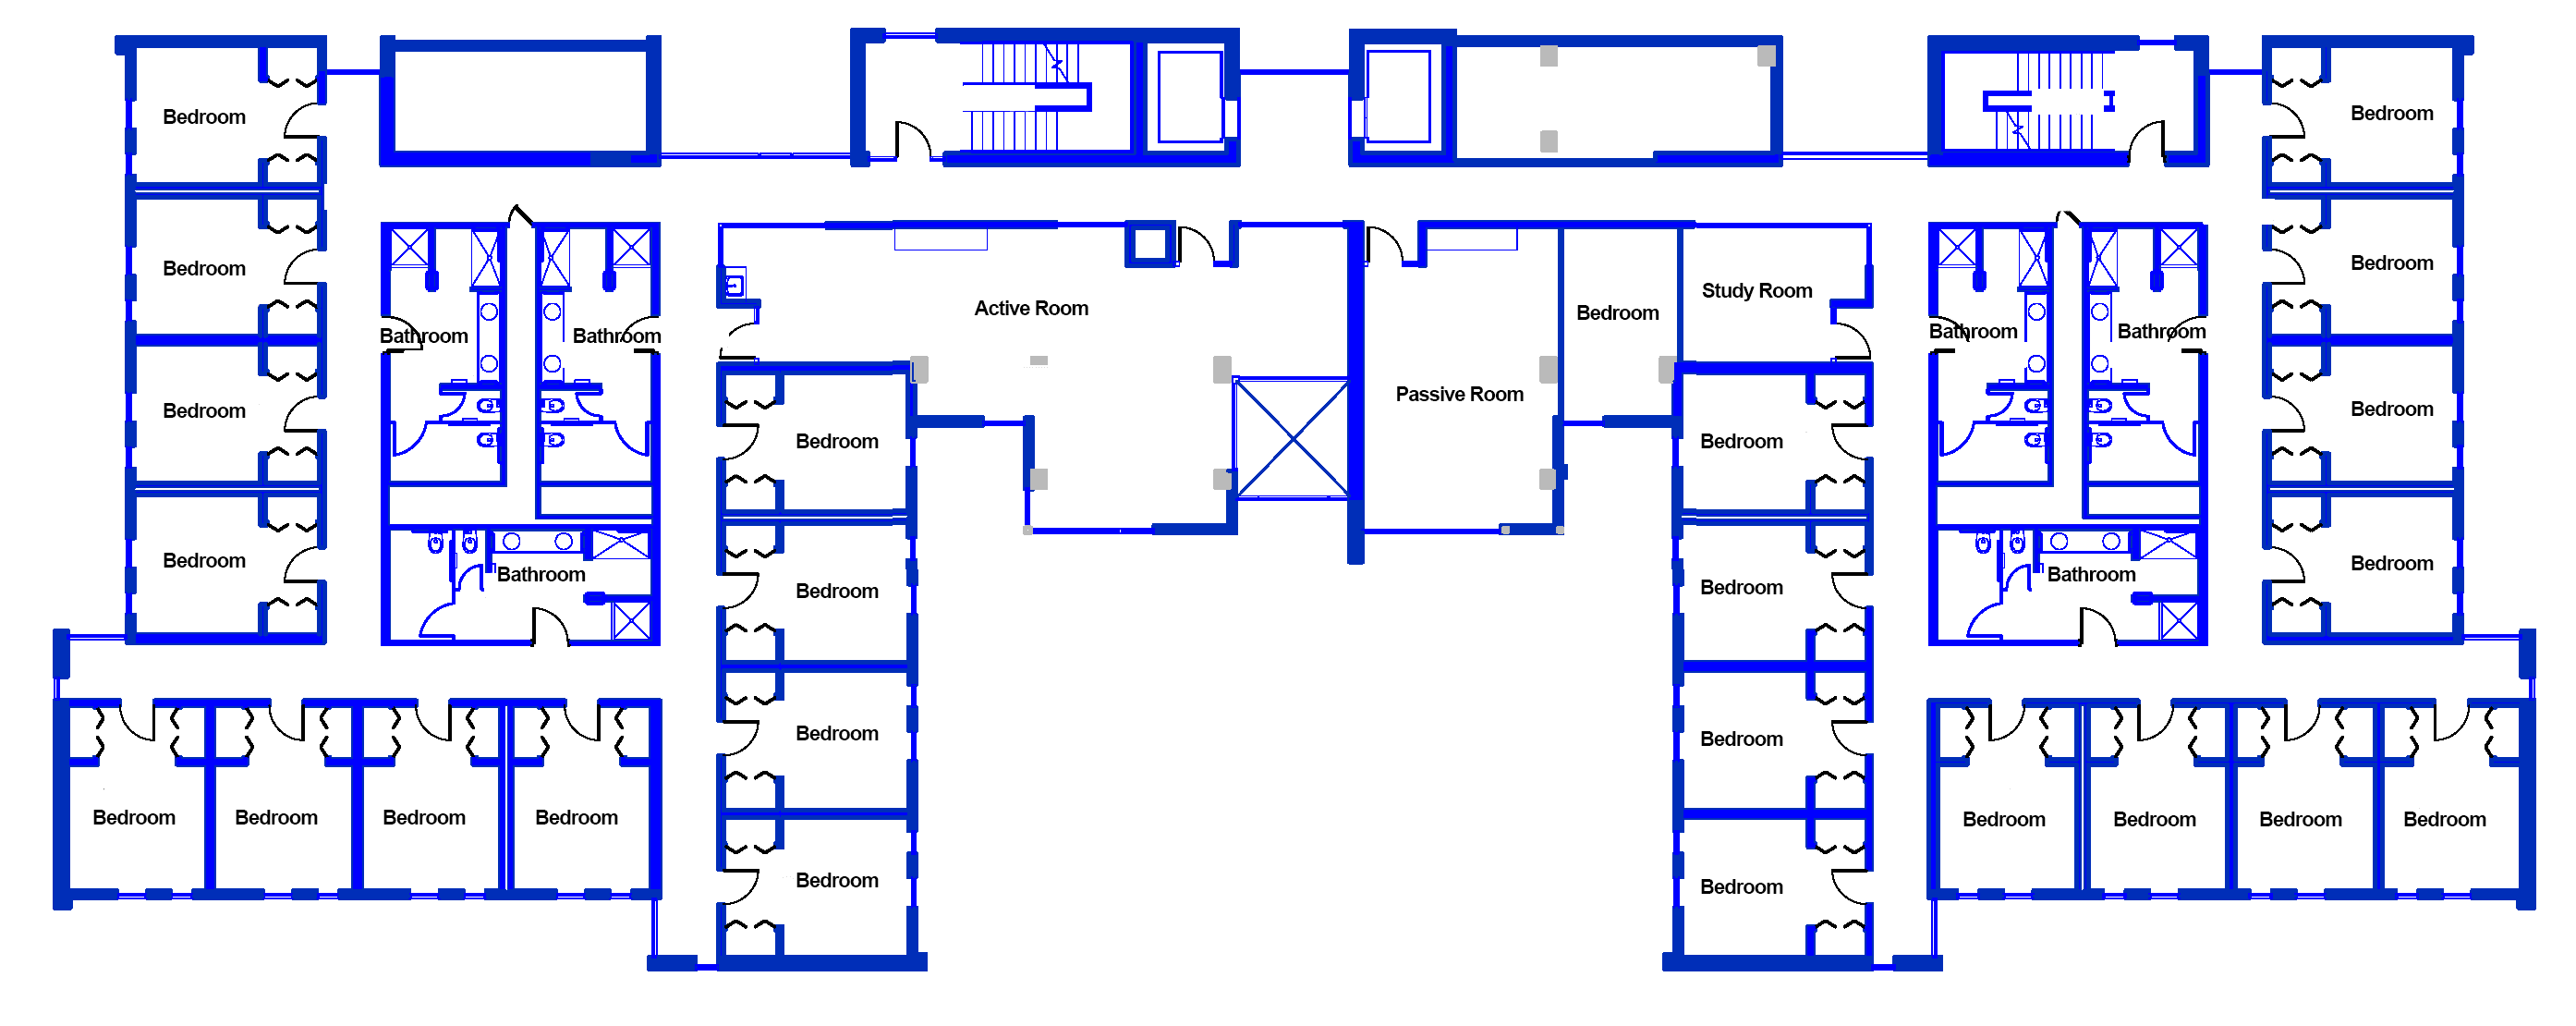 Residence Halls Floor Plan